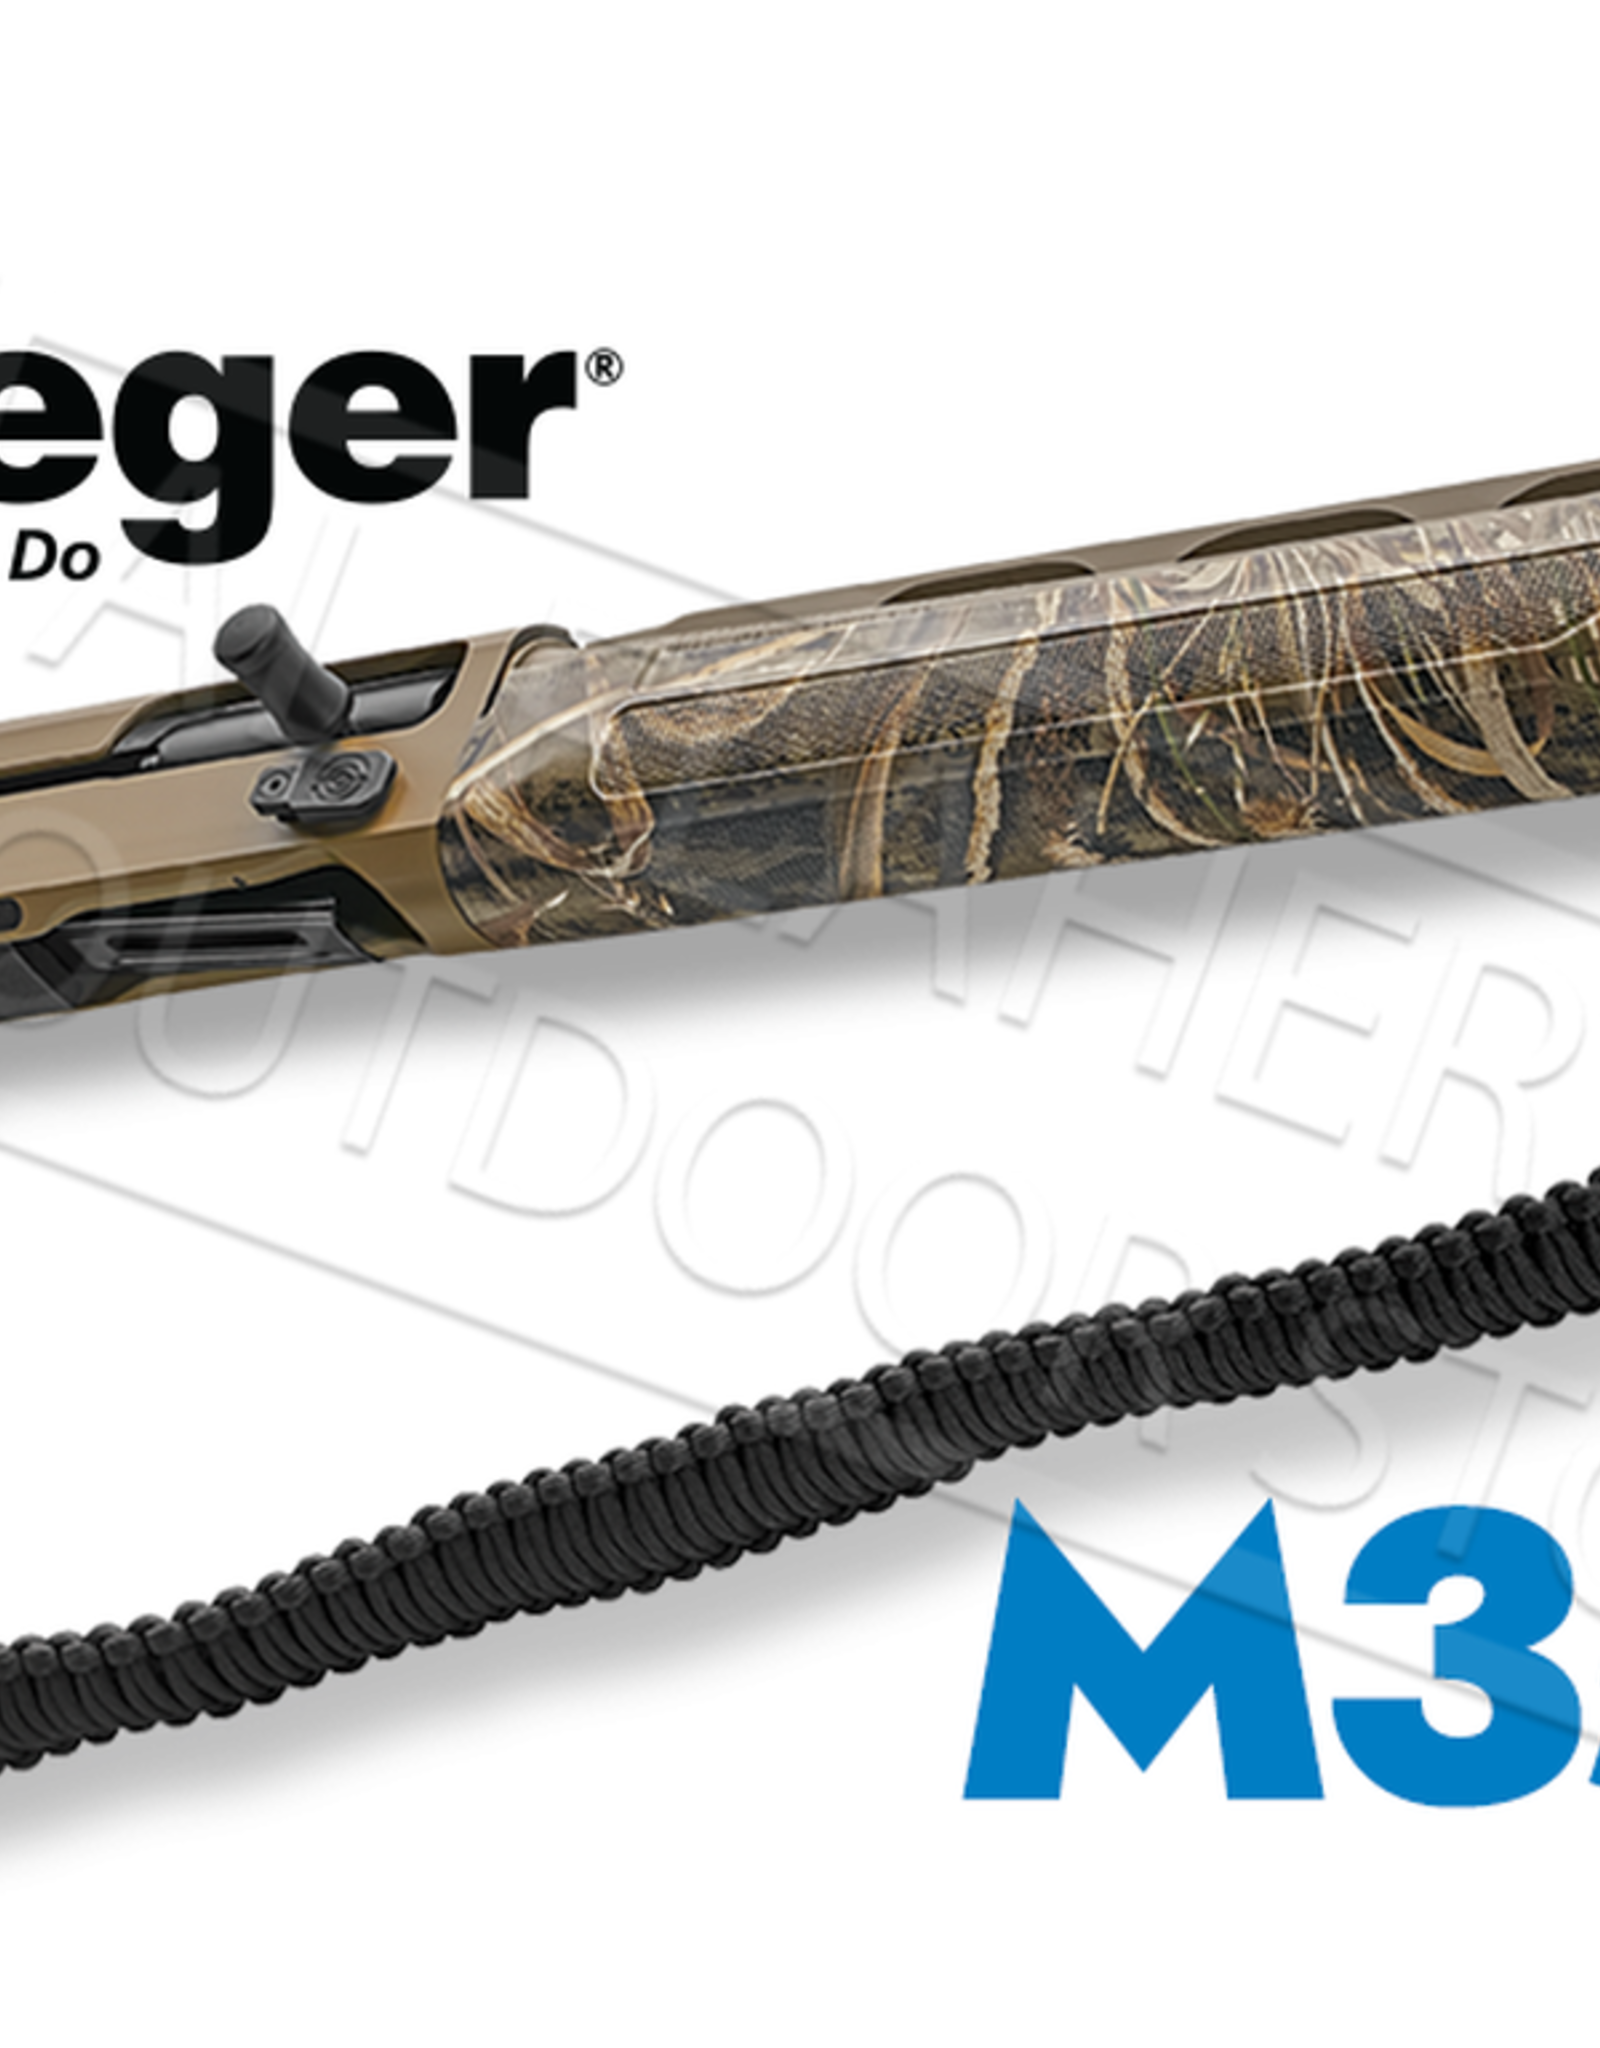 Stoeger M3500 12/28” Water Fowler Shot gun